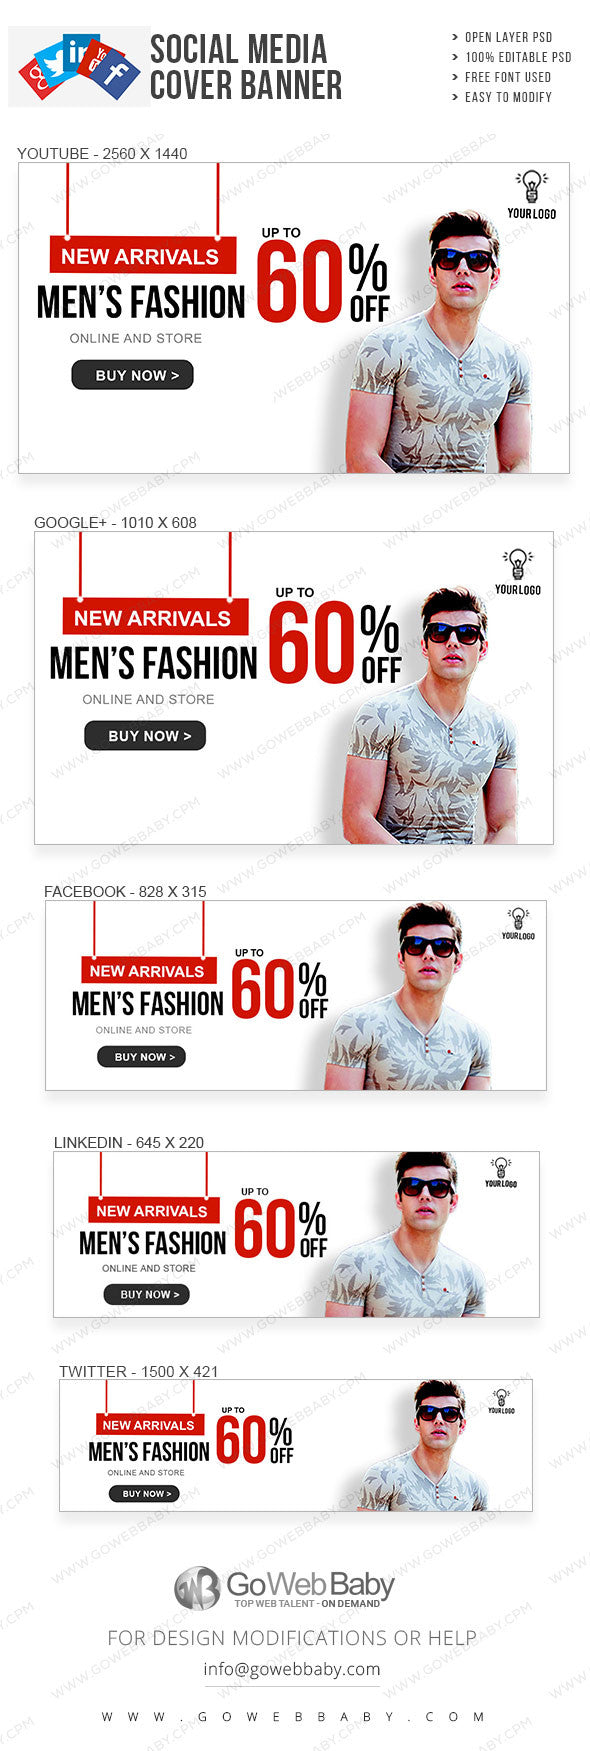 Social Media Cover Banner - Men's clothing for website marketing - GoWebBaby.Com